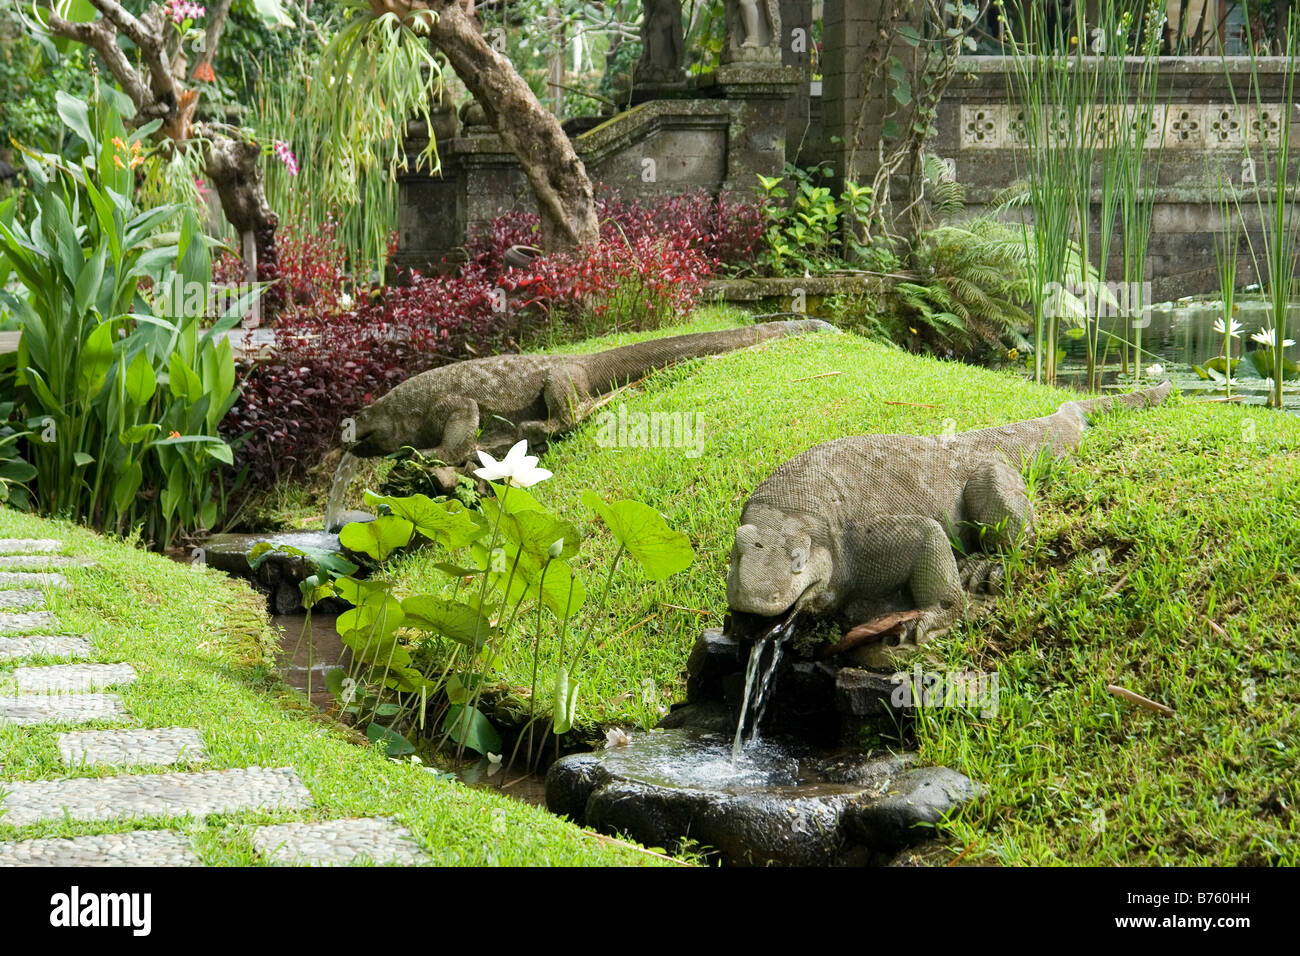 Gardens of the Agung Rai Museum of Art, at Ubud (Bali - Indonesia). A Ubud, les jardins du Musée Agung Rai (Bali - Indonésie). Stock Photo